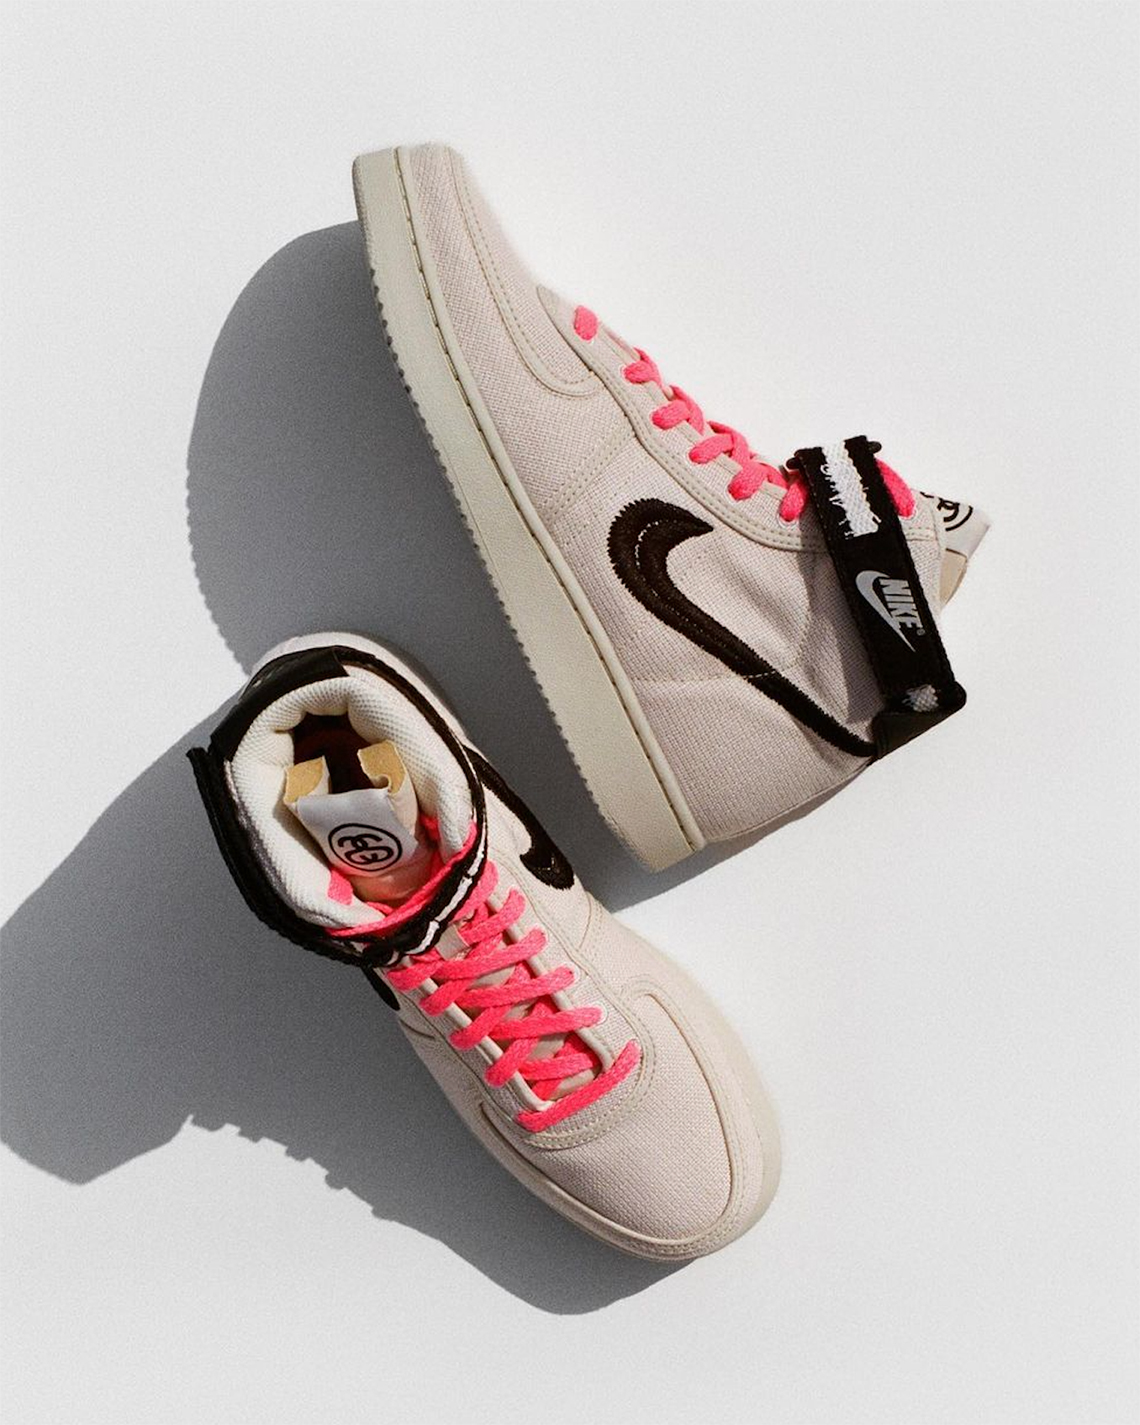 Stussy Nike Vandal High Release Date   SneakerNews.com